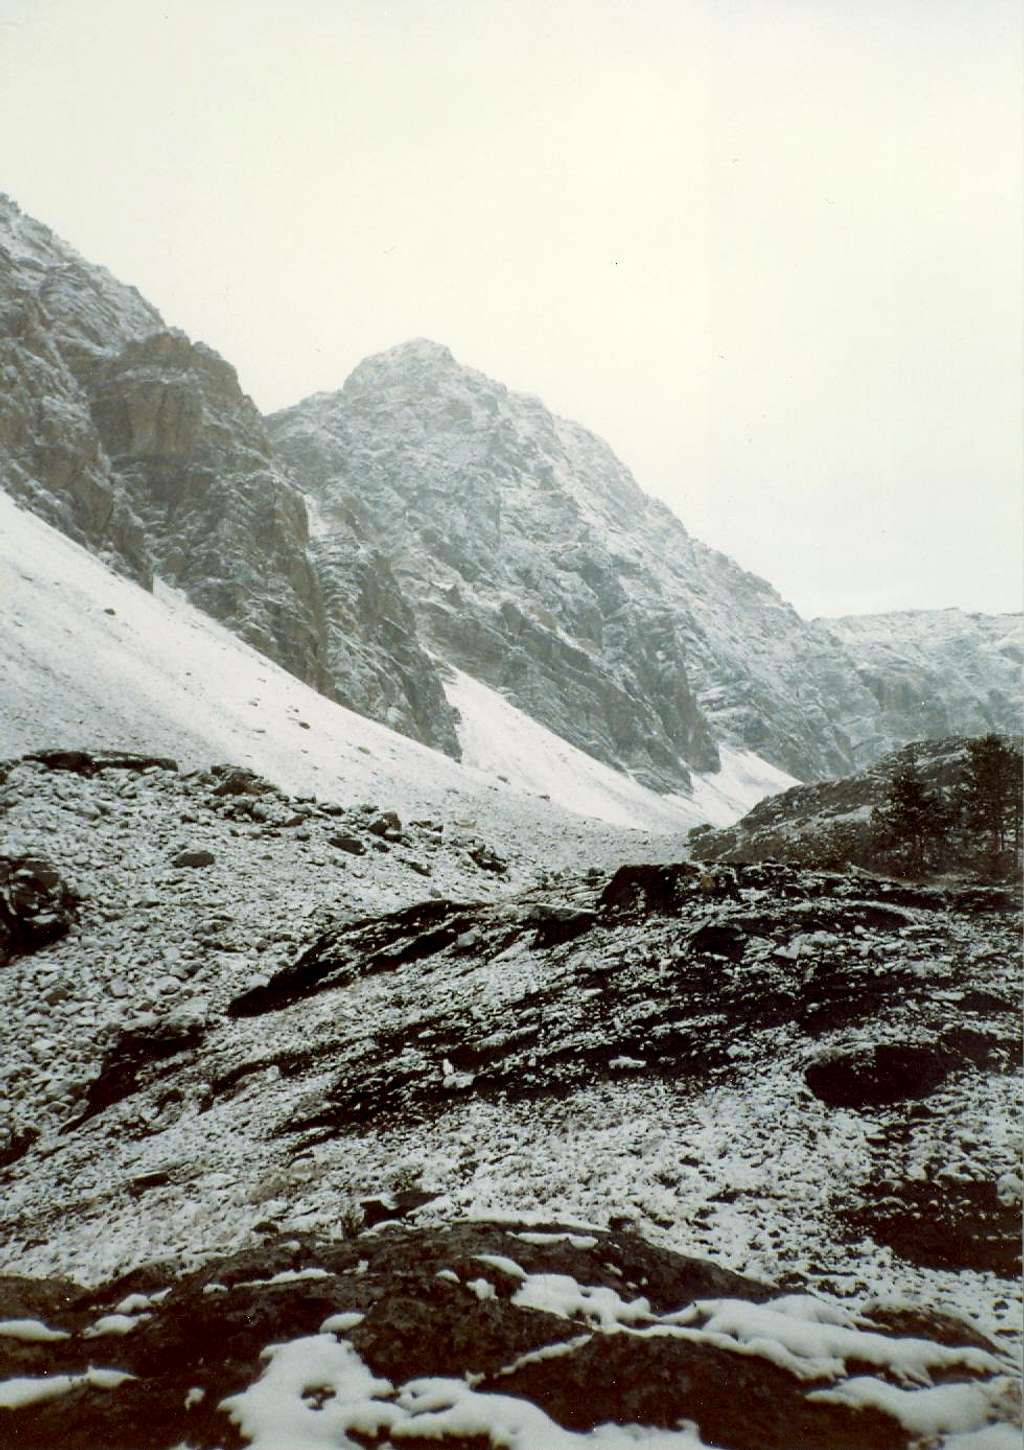 Sacajawea Peak